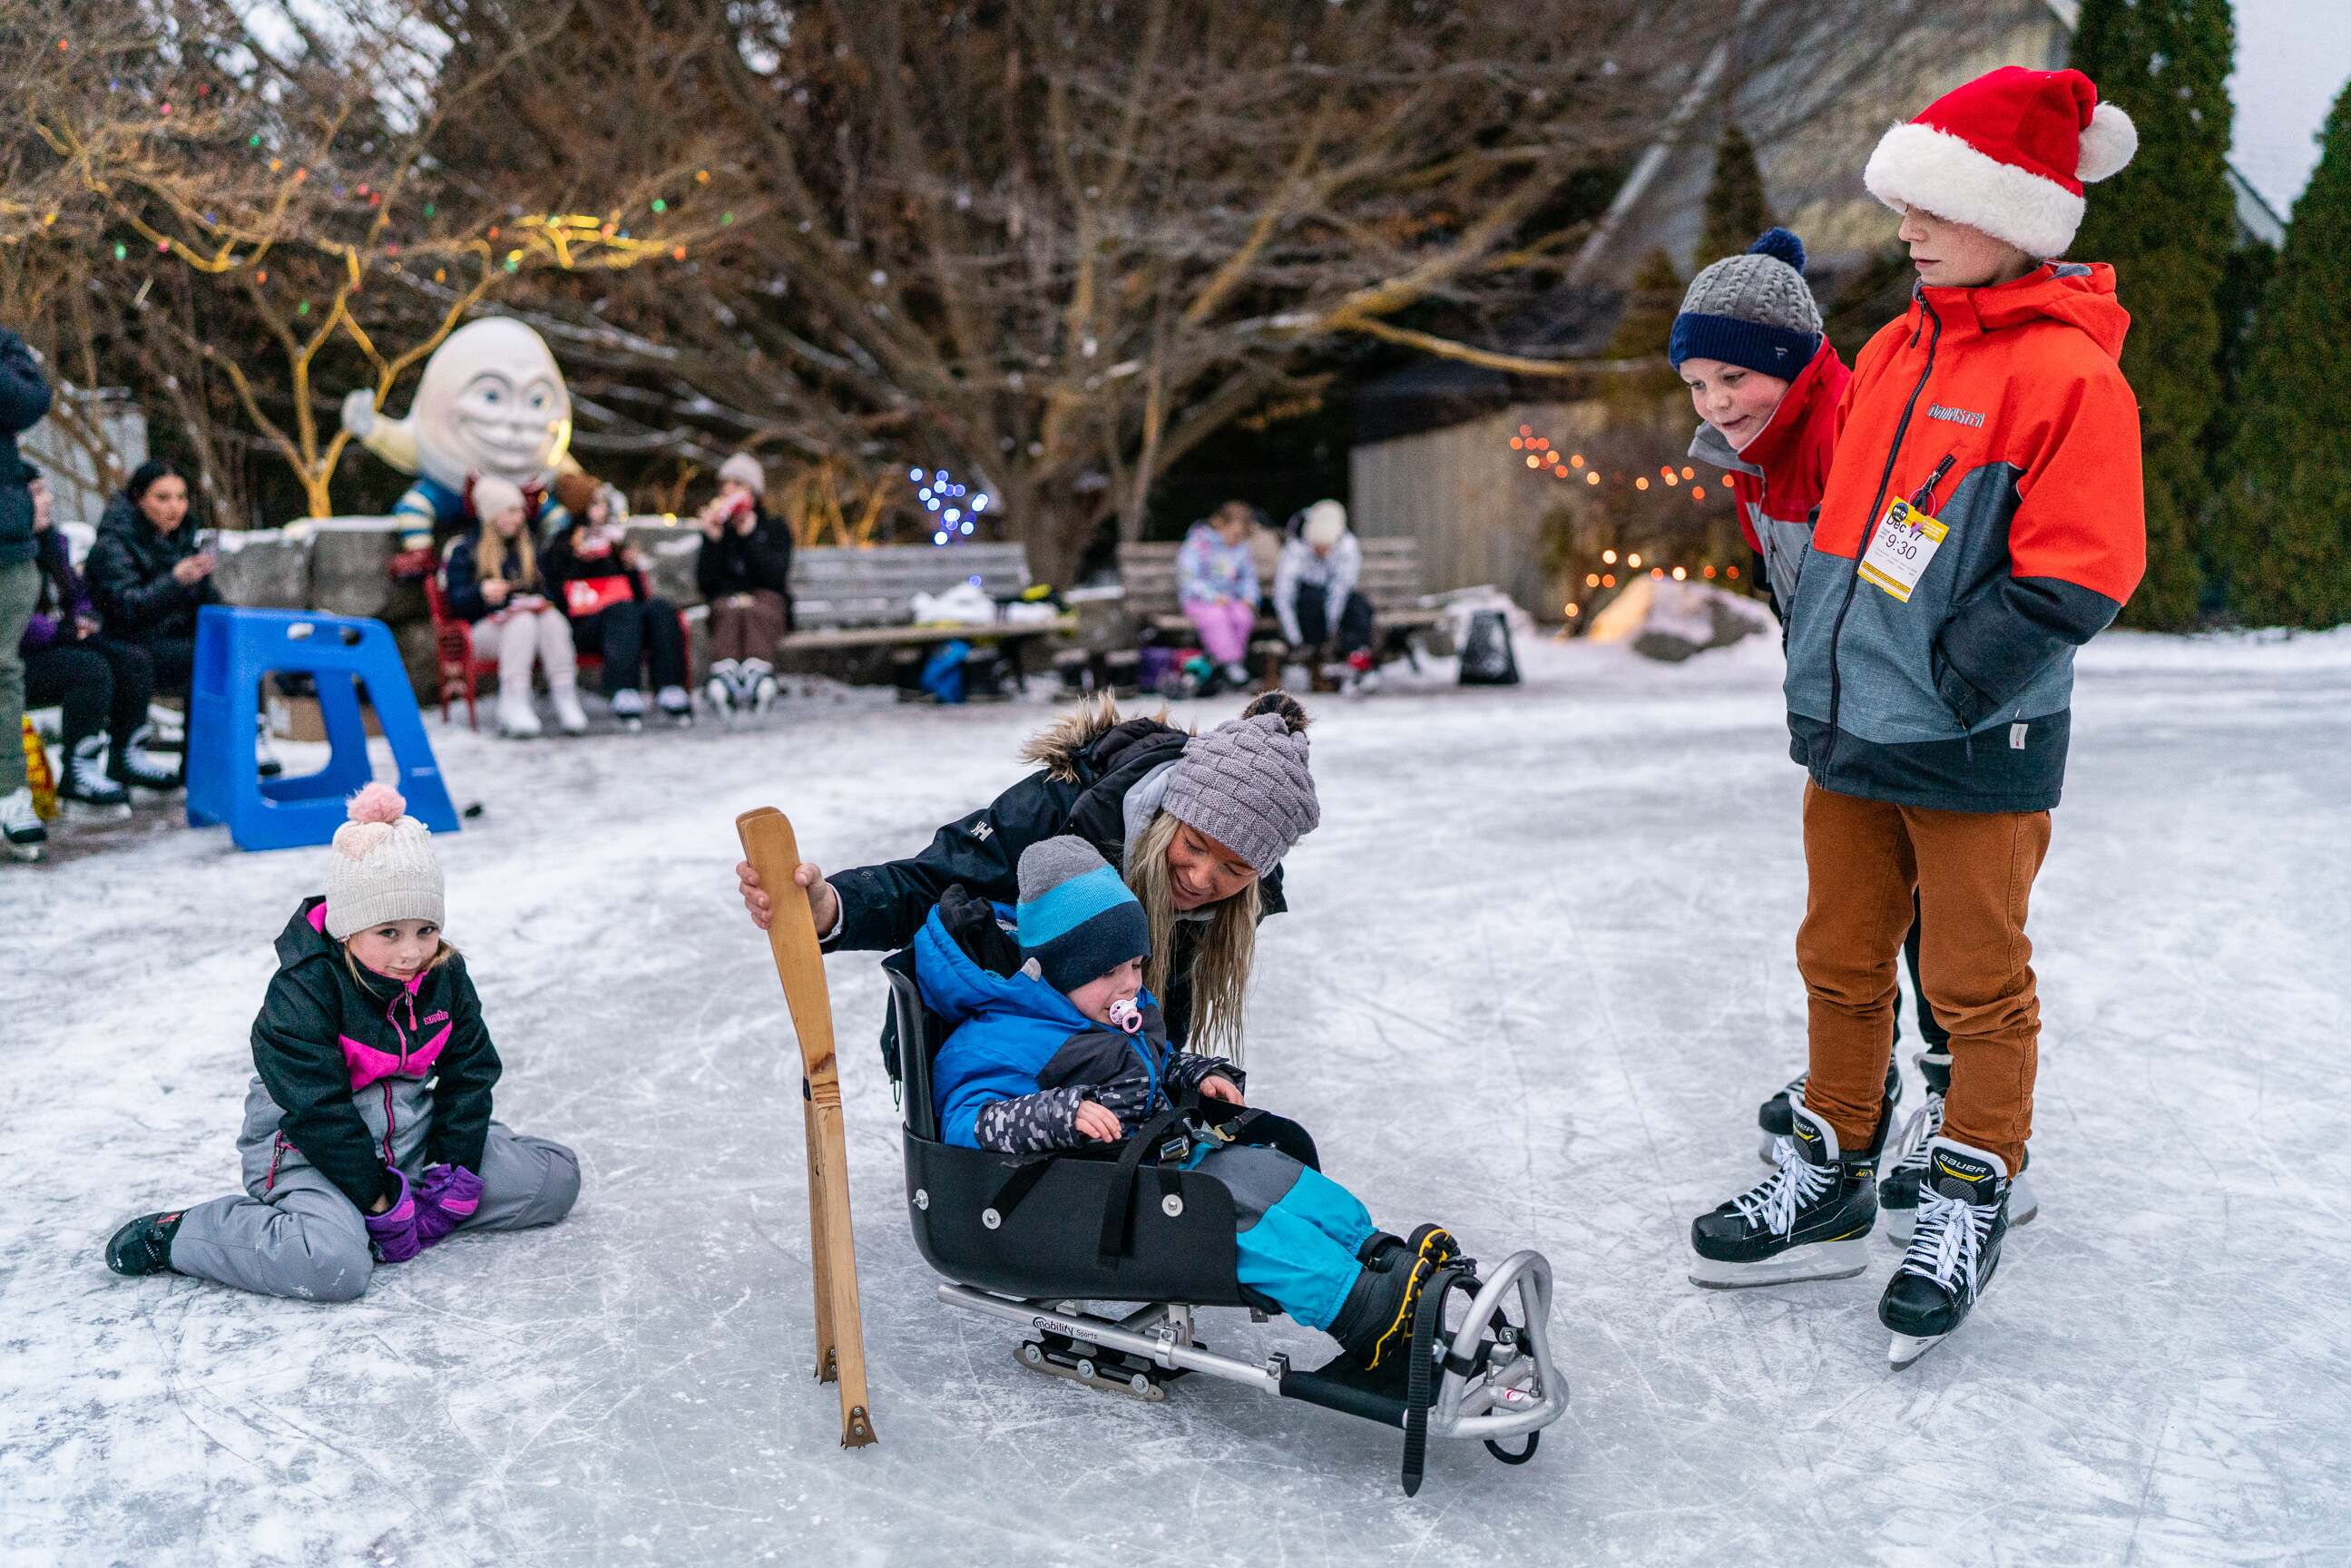 People enjoying the winter skate trial at Storybook Gardens